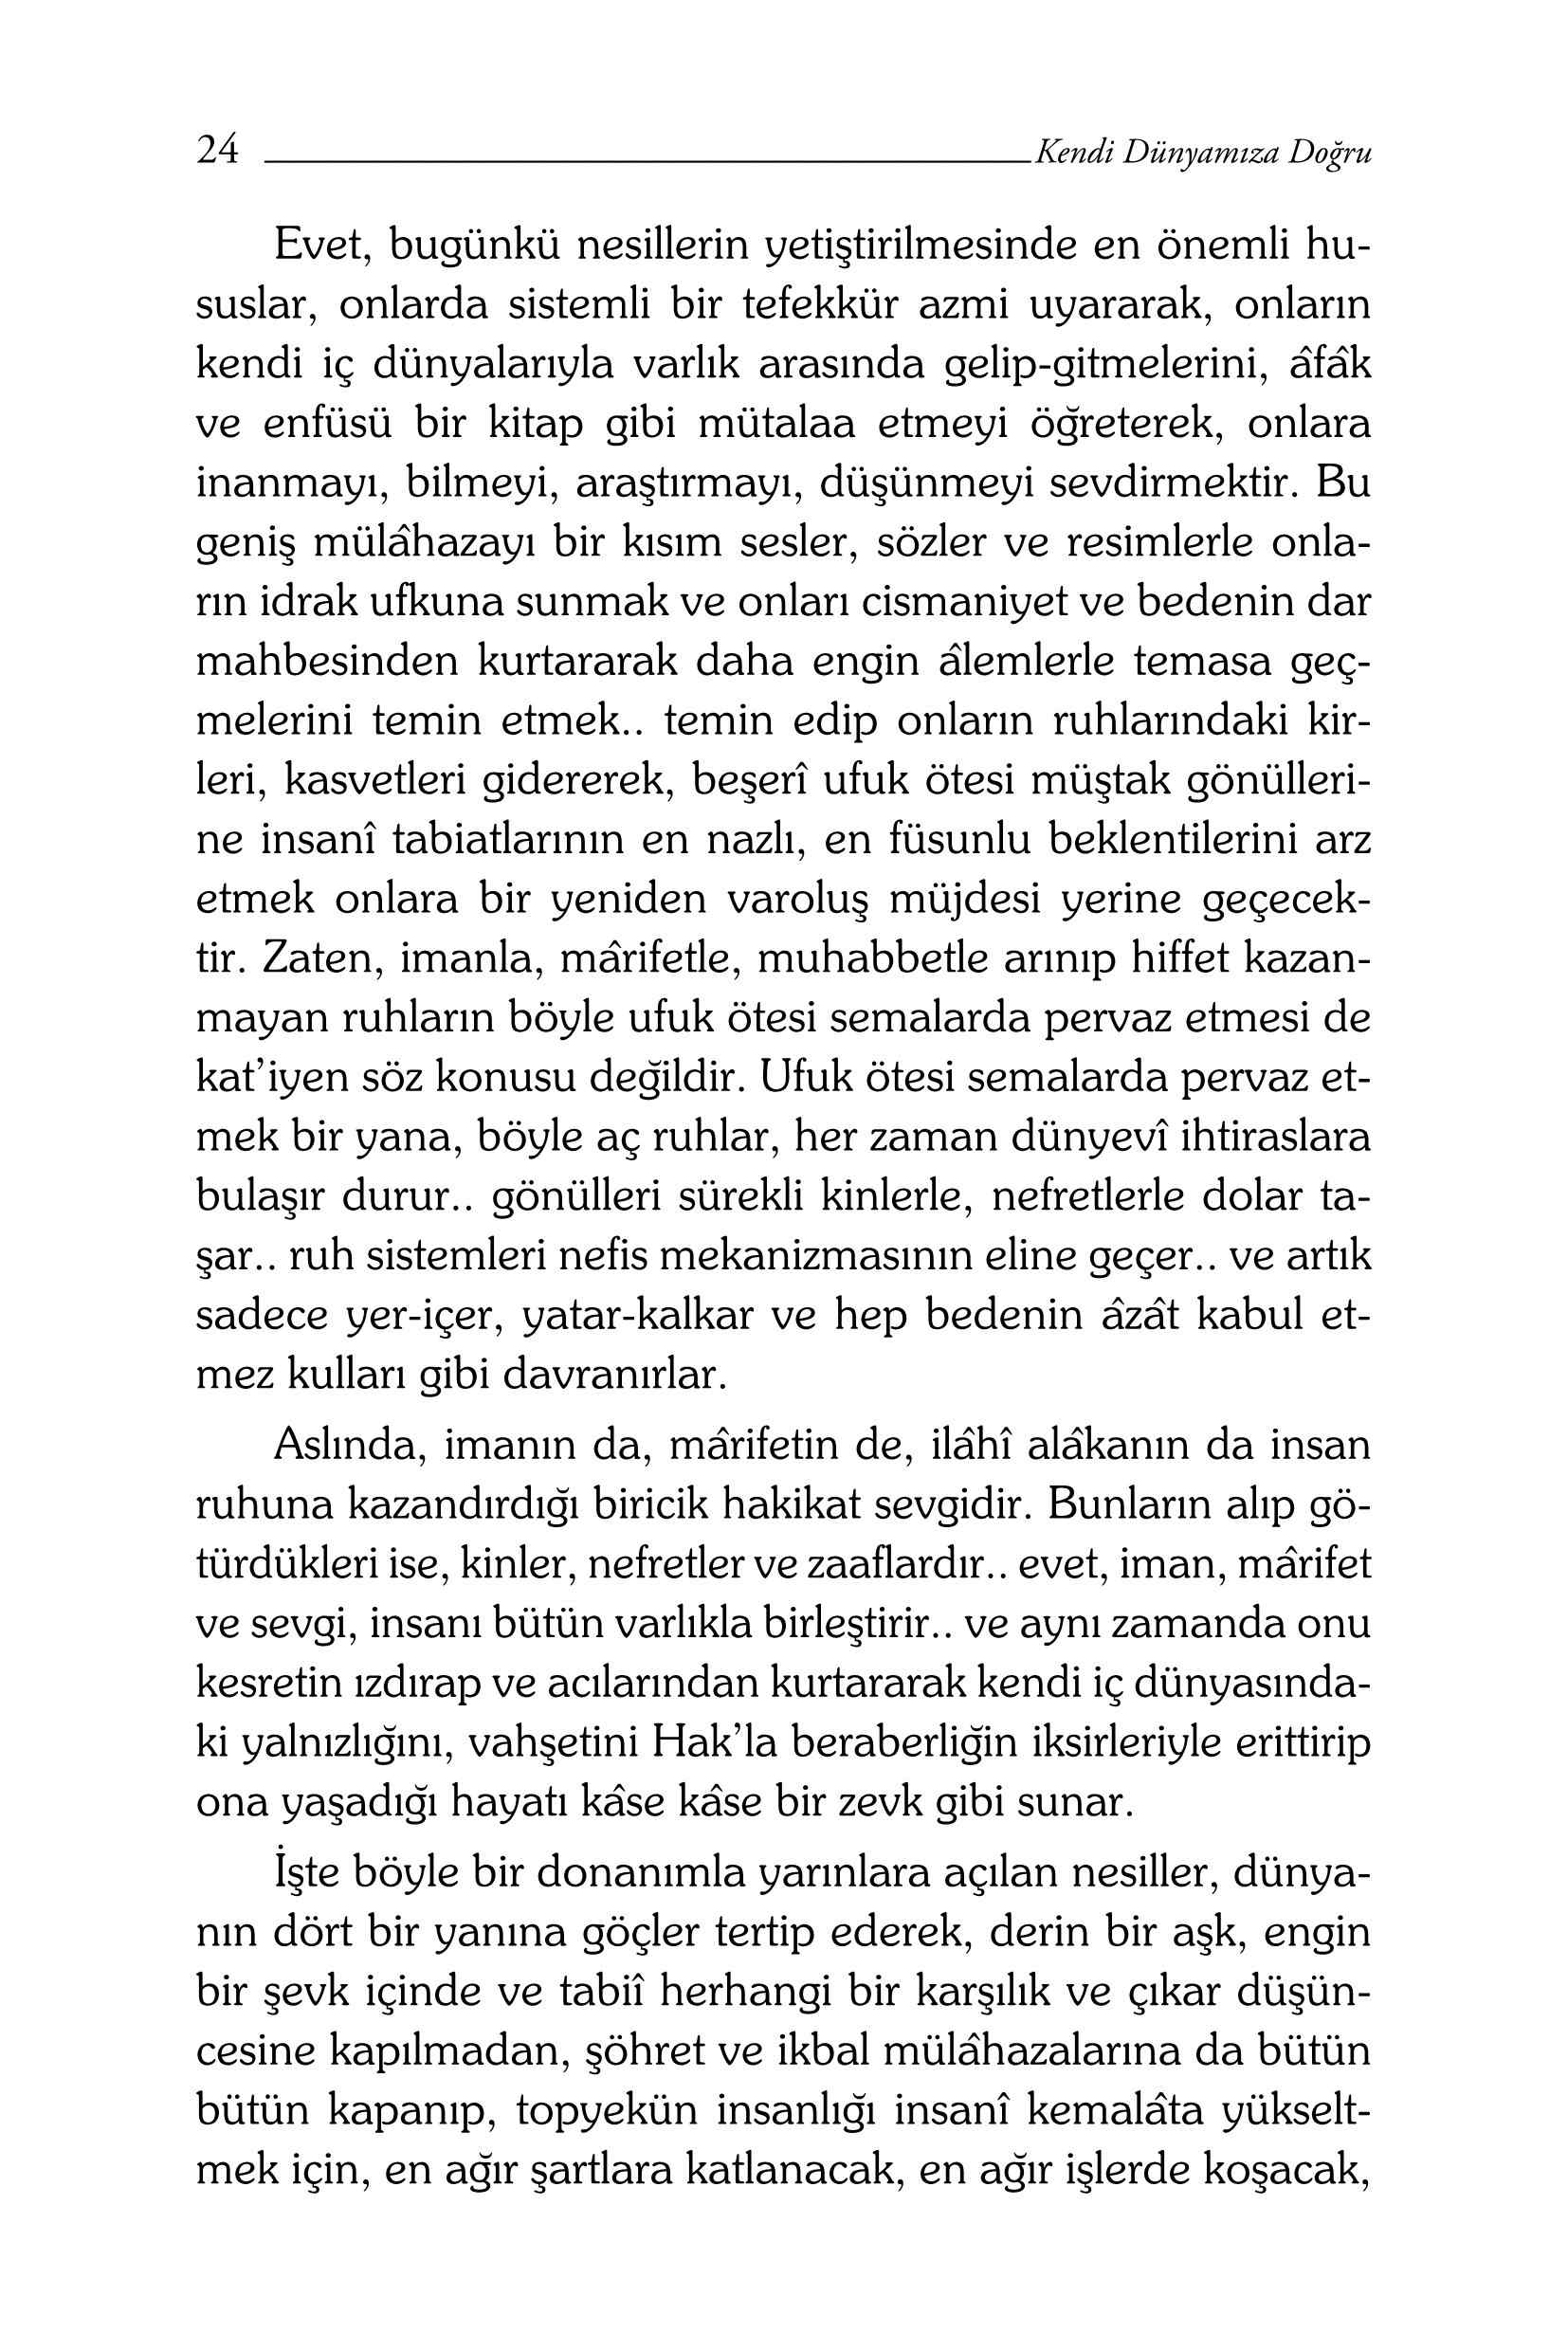 Ruhumuzun Heykelini Dikerken-2 Kendi Dunyamiza Dogru - M F Gulen.pdf, 206-Sayfa 